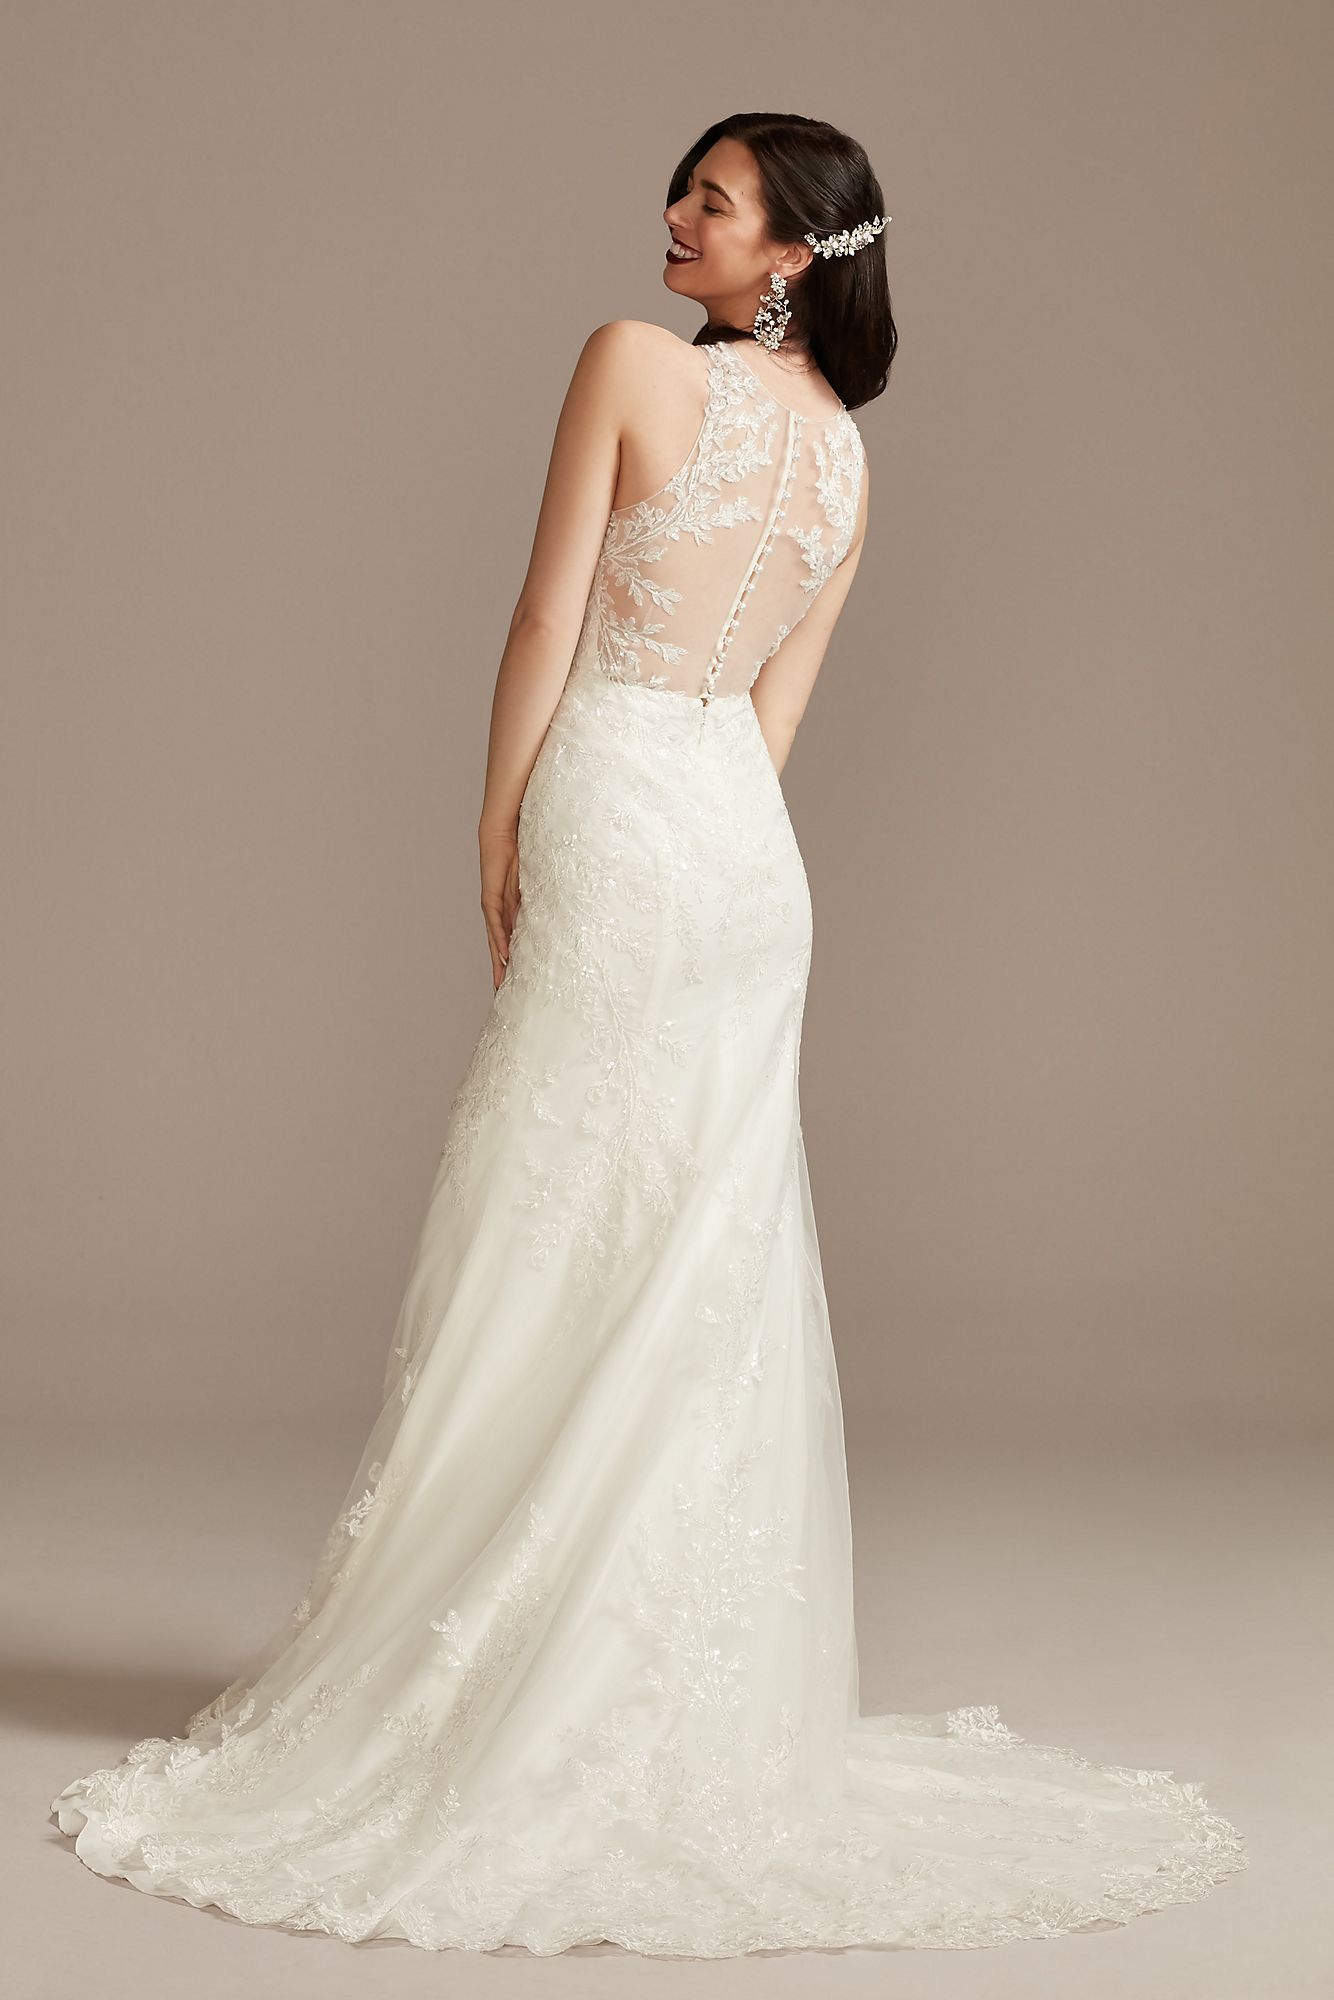 Buttoned Illusion Back Applique Tall Wedding Dress Oleg Cassini 4XLCWG909